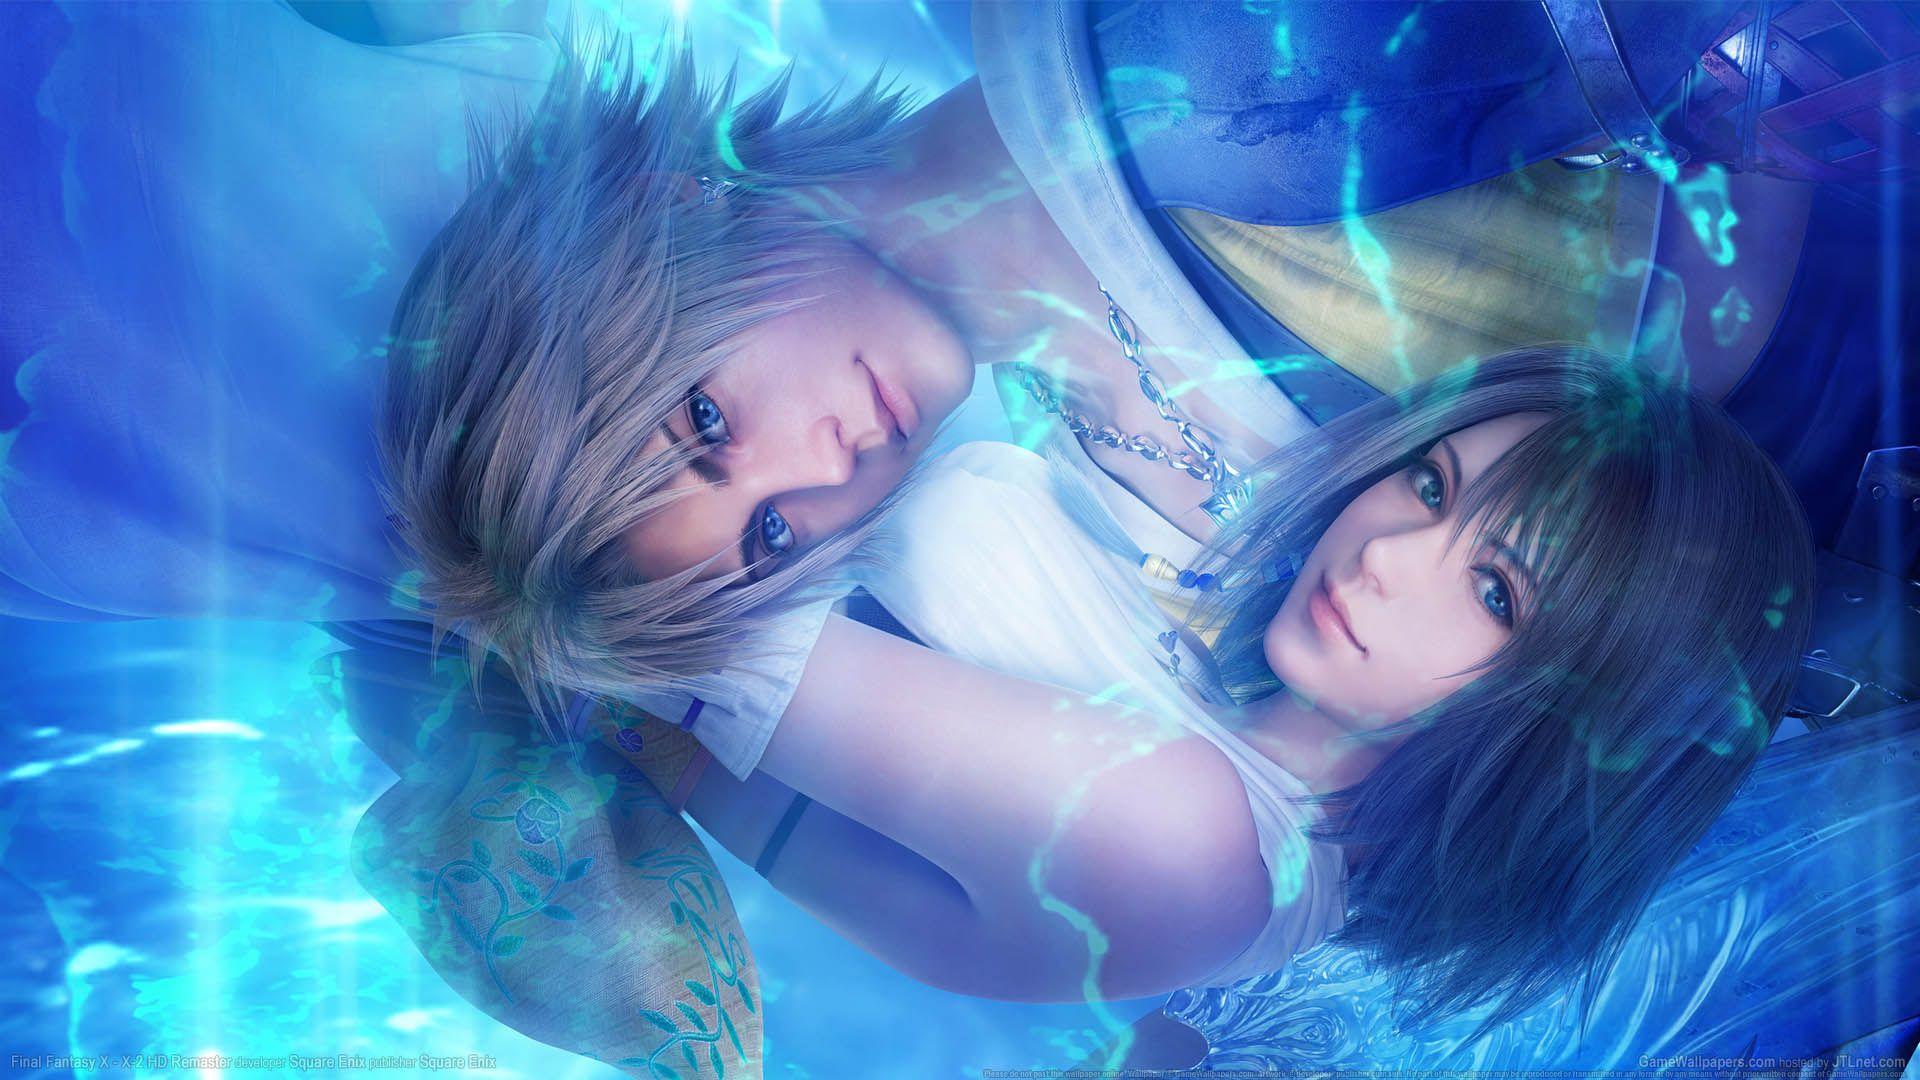 Final Fantasy X 2 HD Wallpaper Or Desktop Background